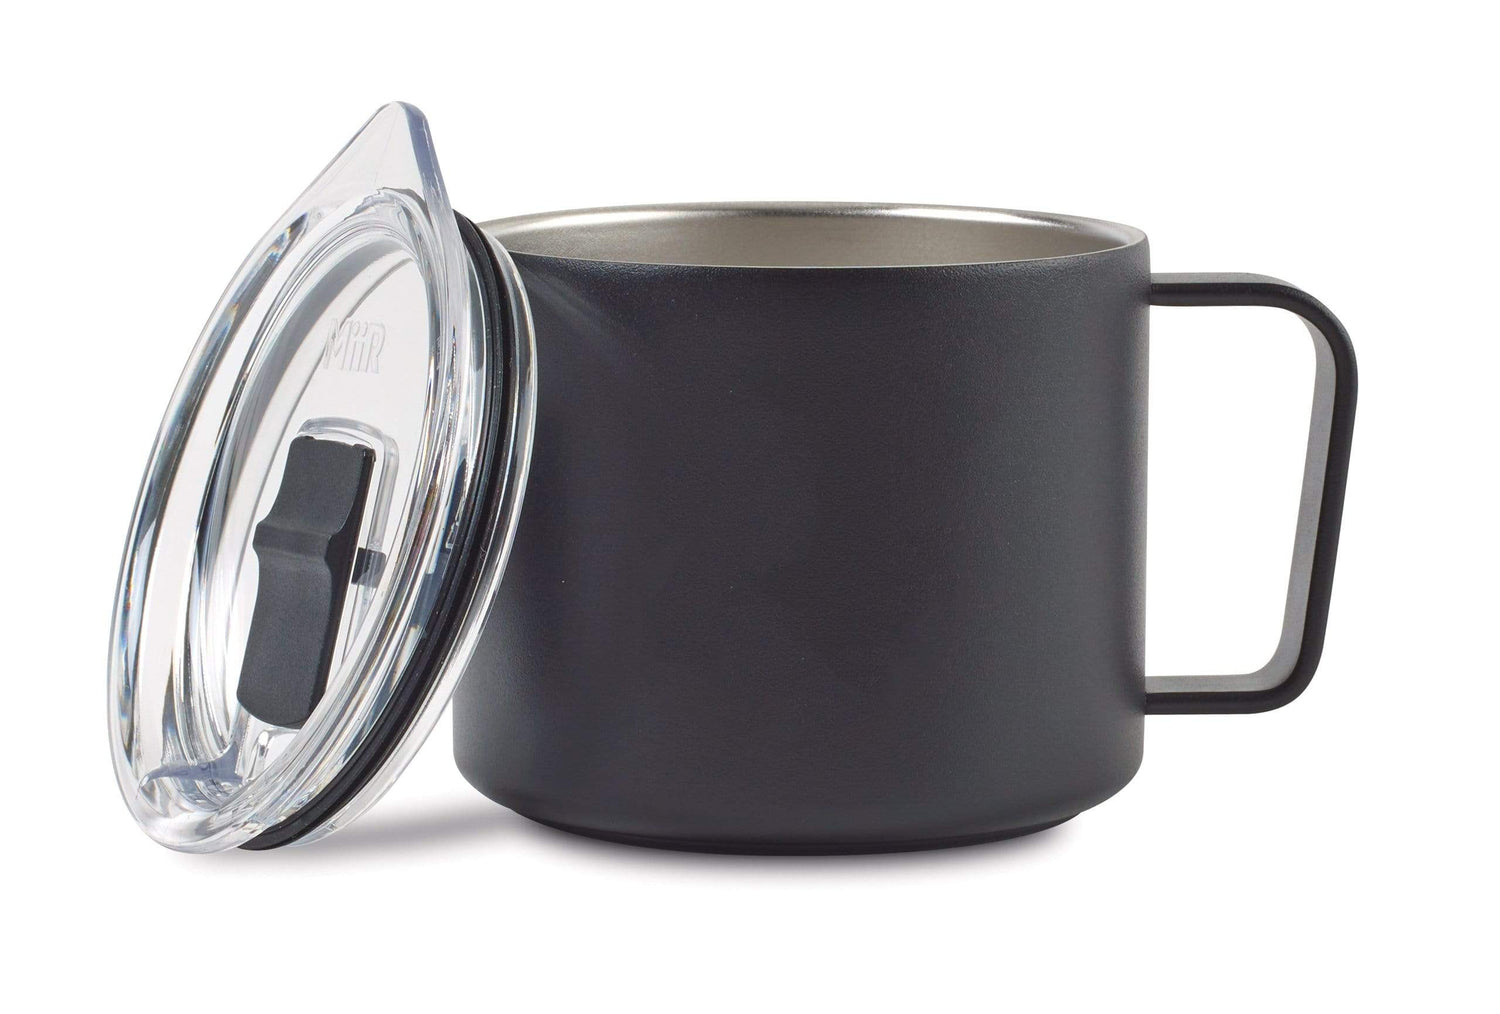 Stainless Steel Coffee Mug - 8 oz.